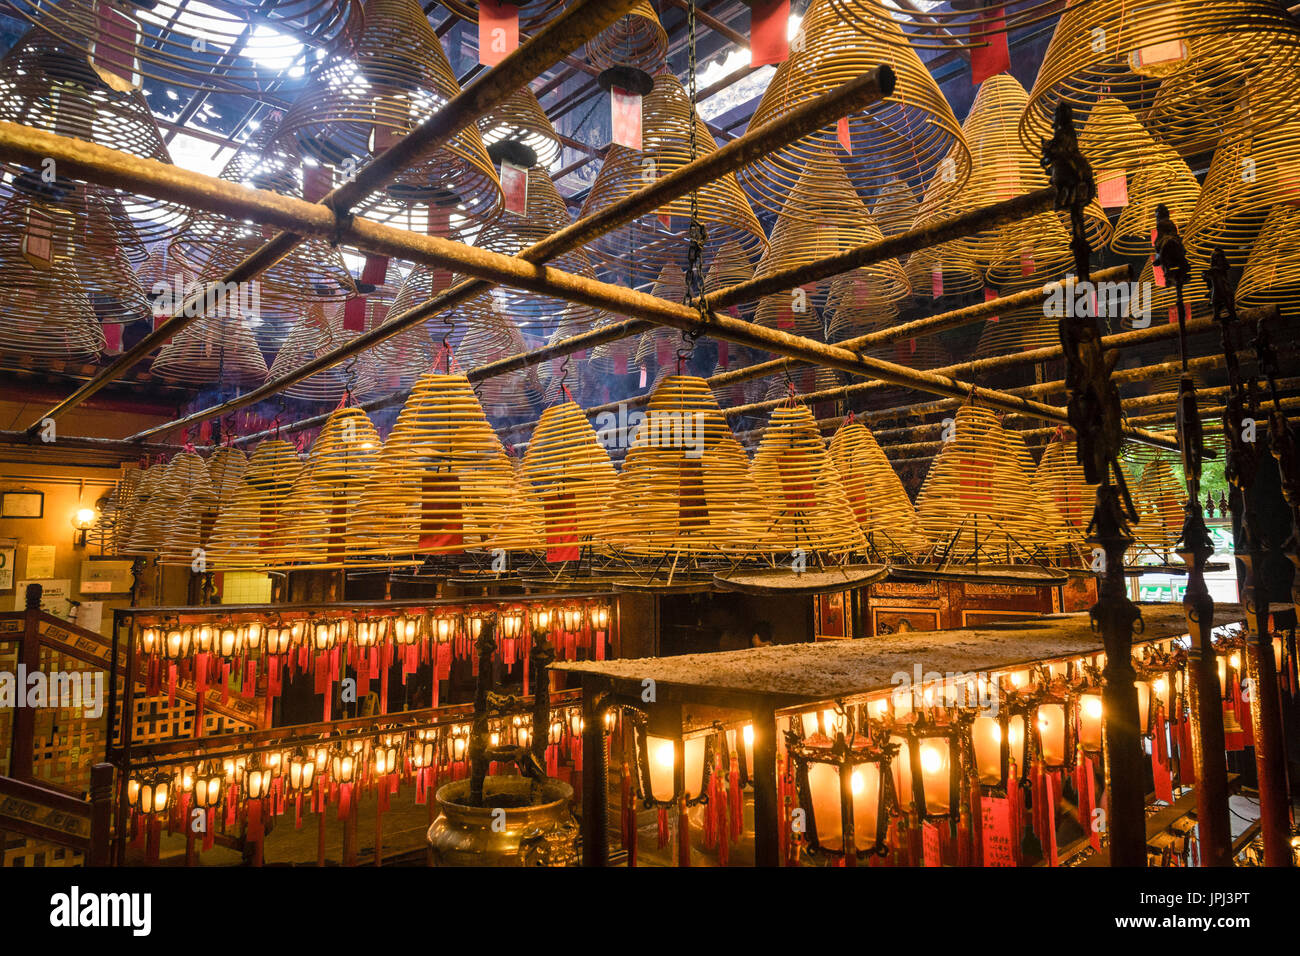 Lanterns and incense coils burning inside Man Mo Temple in Hong Kong Stock Photo